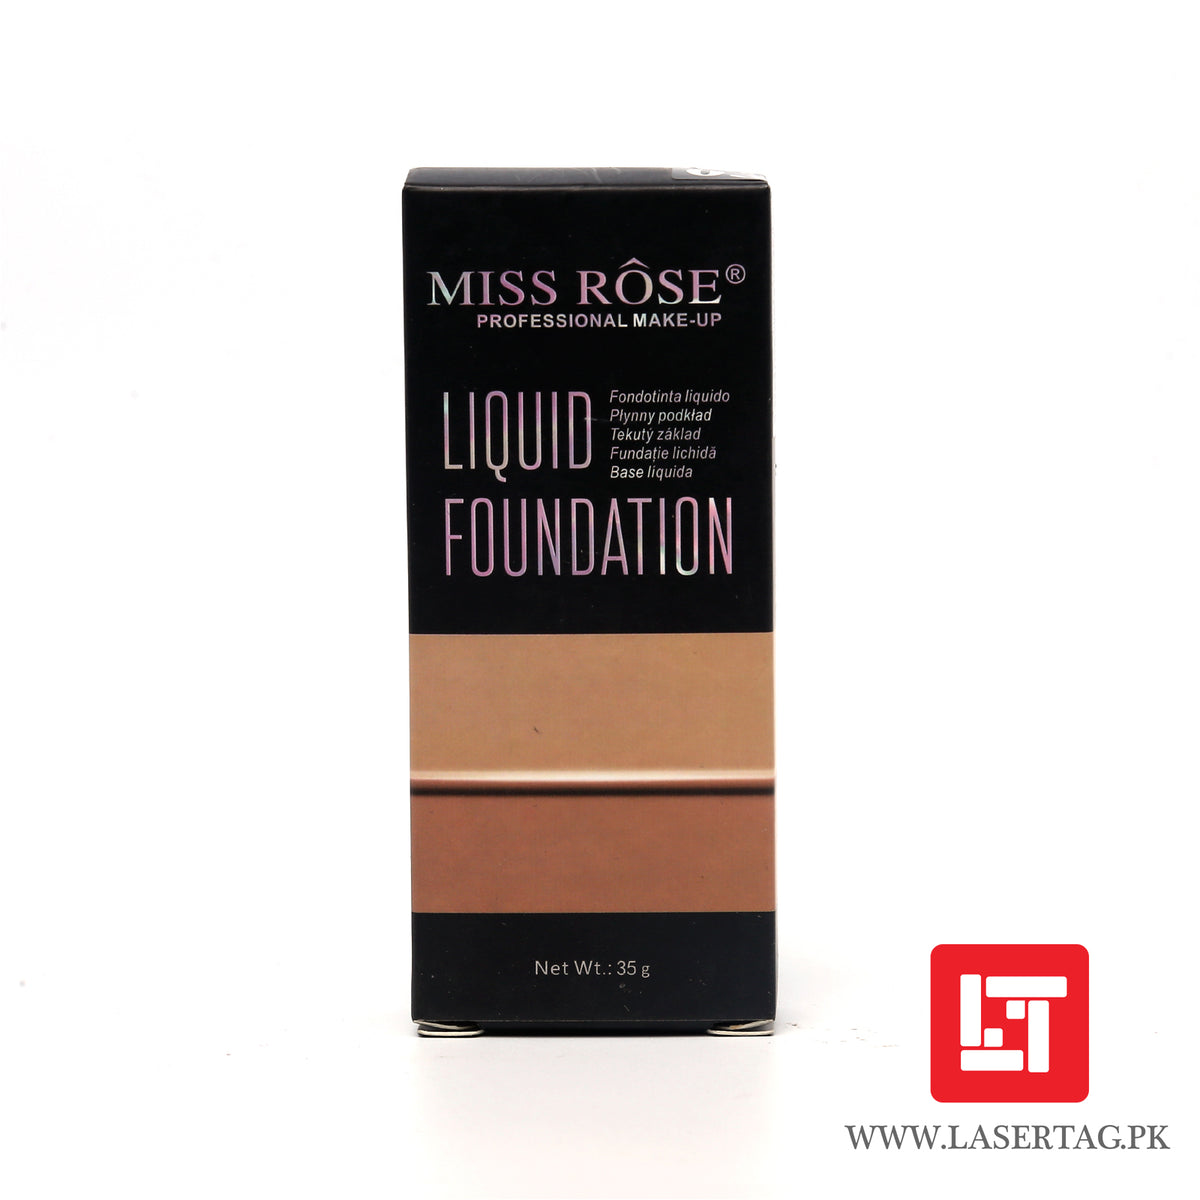 Miss Rose Liquid Foundation 35g Beige 1 freeshipping - lasertag.pk